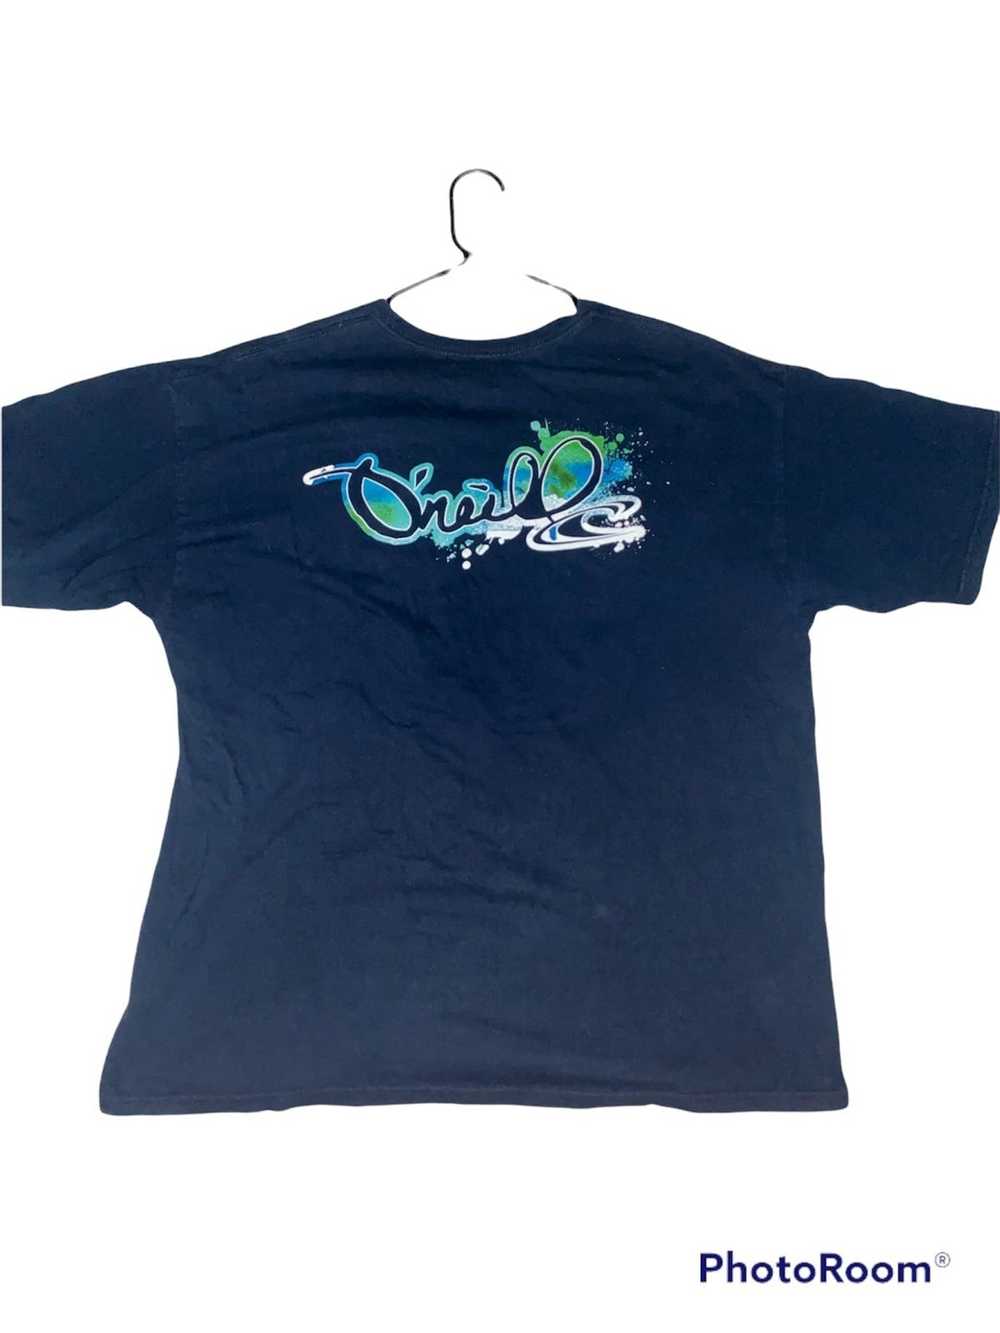 Oneill Vintage O’Neill T-shirt - image 2